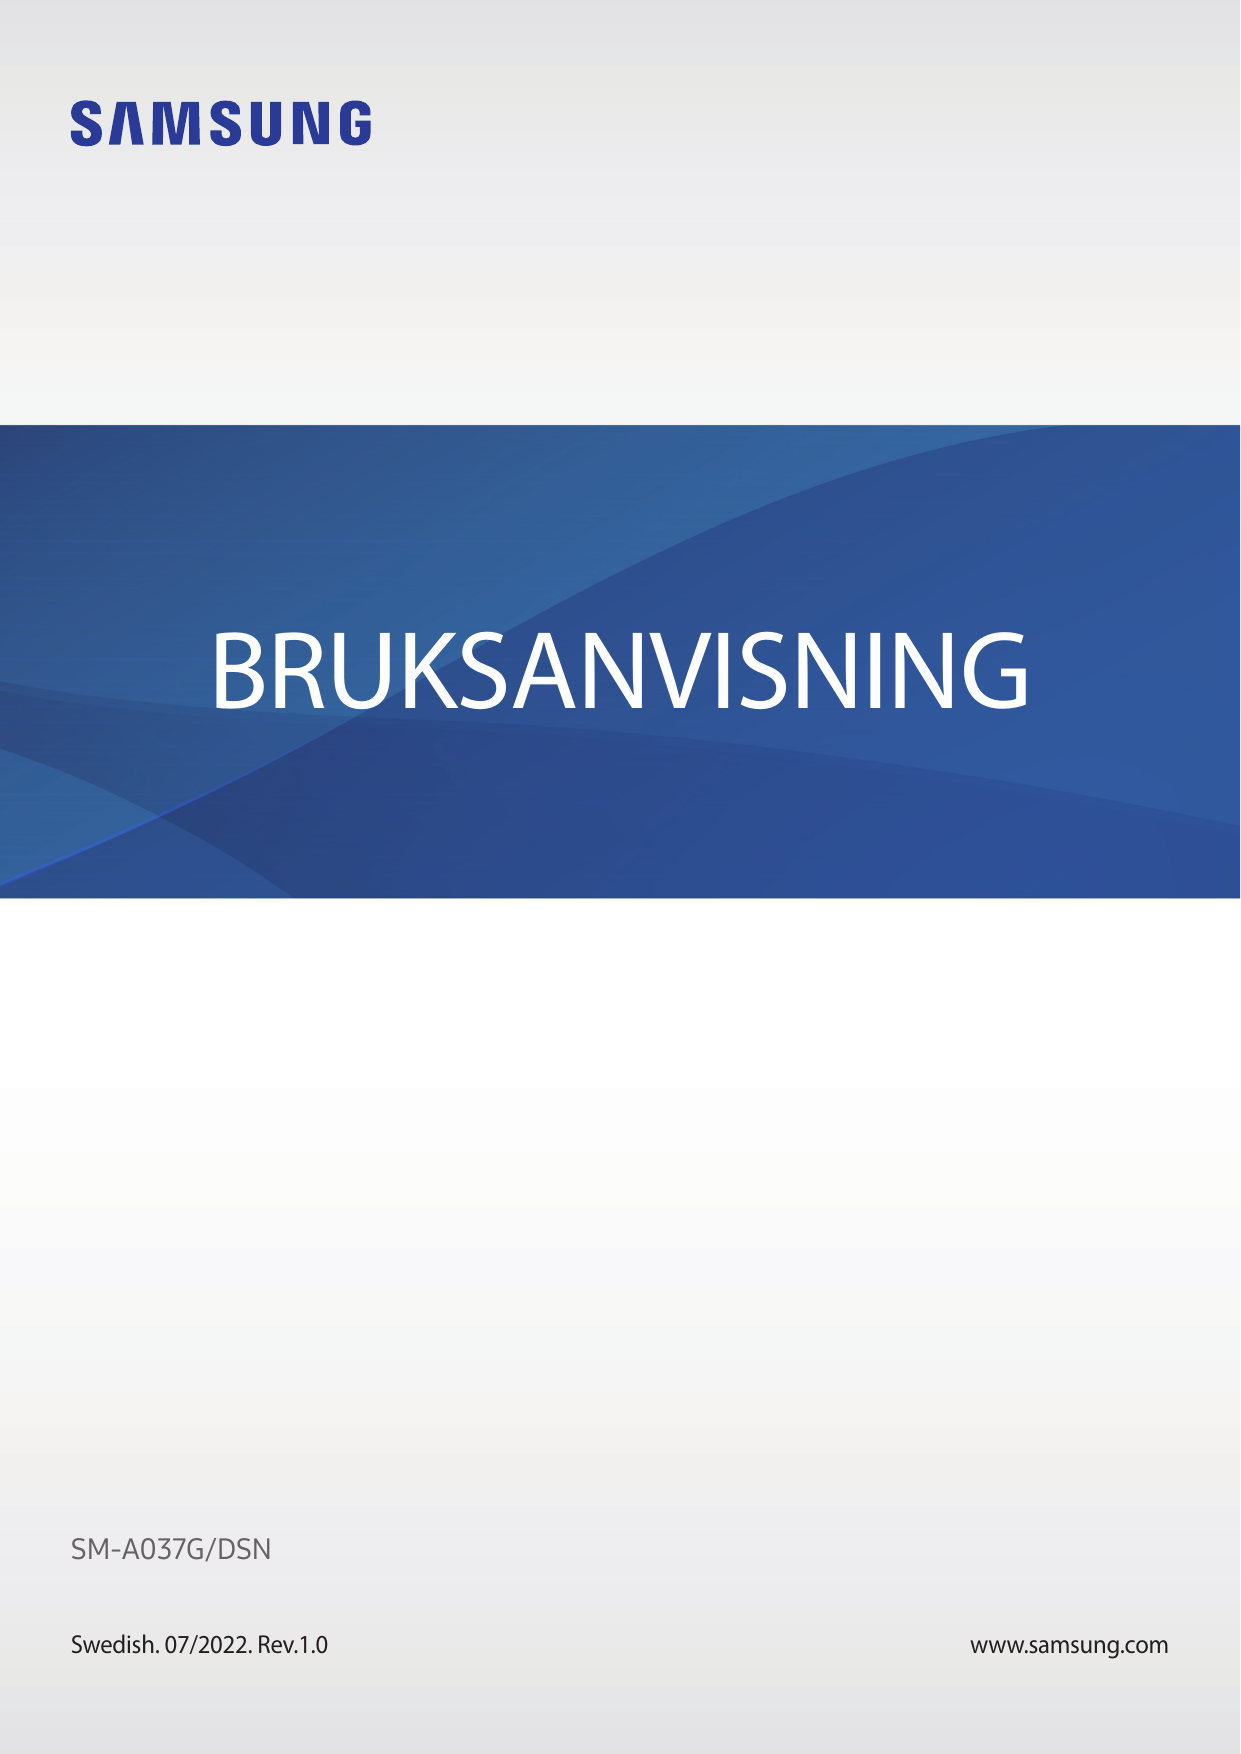 BRUKSANVISNINGSM-A037G/DSNSwedish. 07/2022. Rev.1.0www.samsung.com